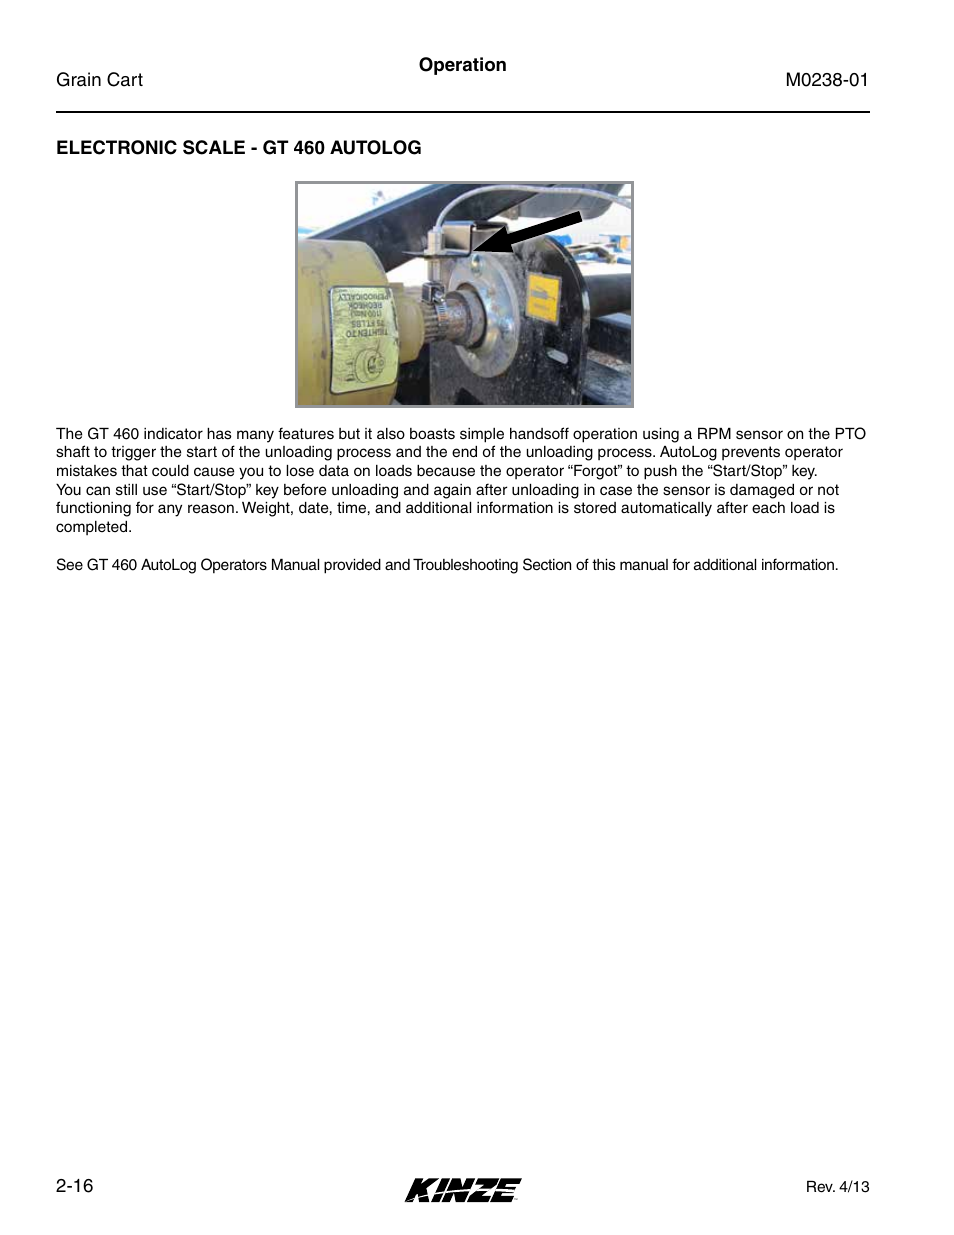 Electronic scale - gt 460 autolog, Electronic scale - gt 460 autolog -16 | Kinze Grain Carts Rev. 7/14 User Manual | Page 30 / 70